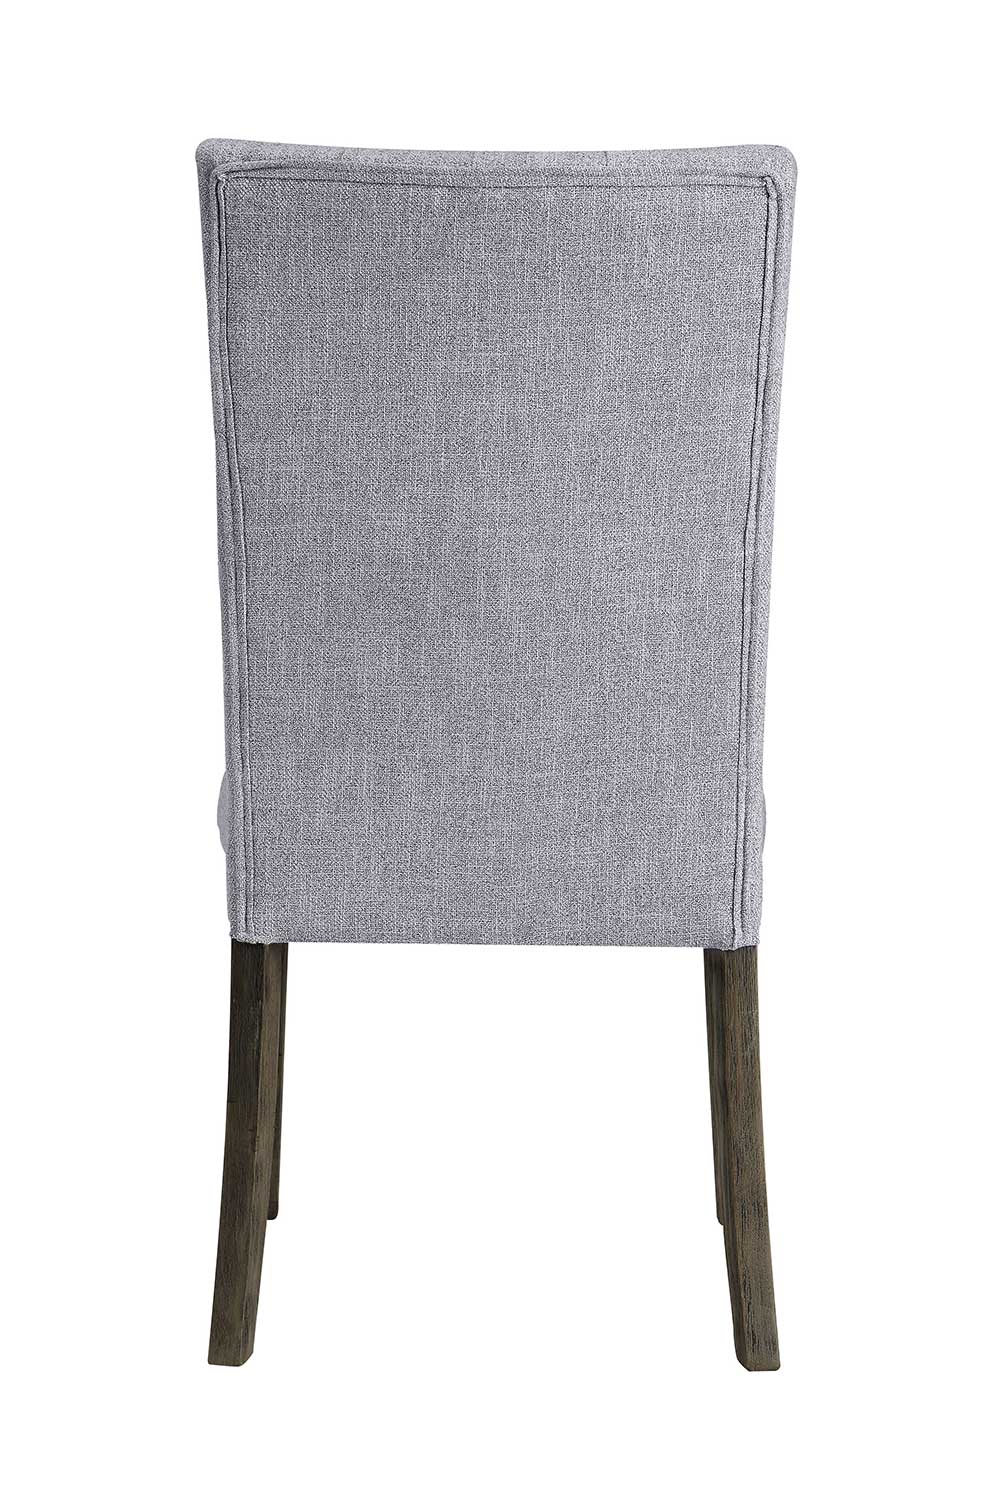 Acme Merel Side Chair - Gray Fabric/Gray Oak